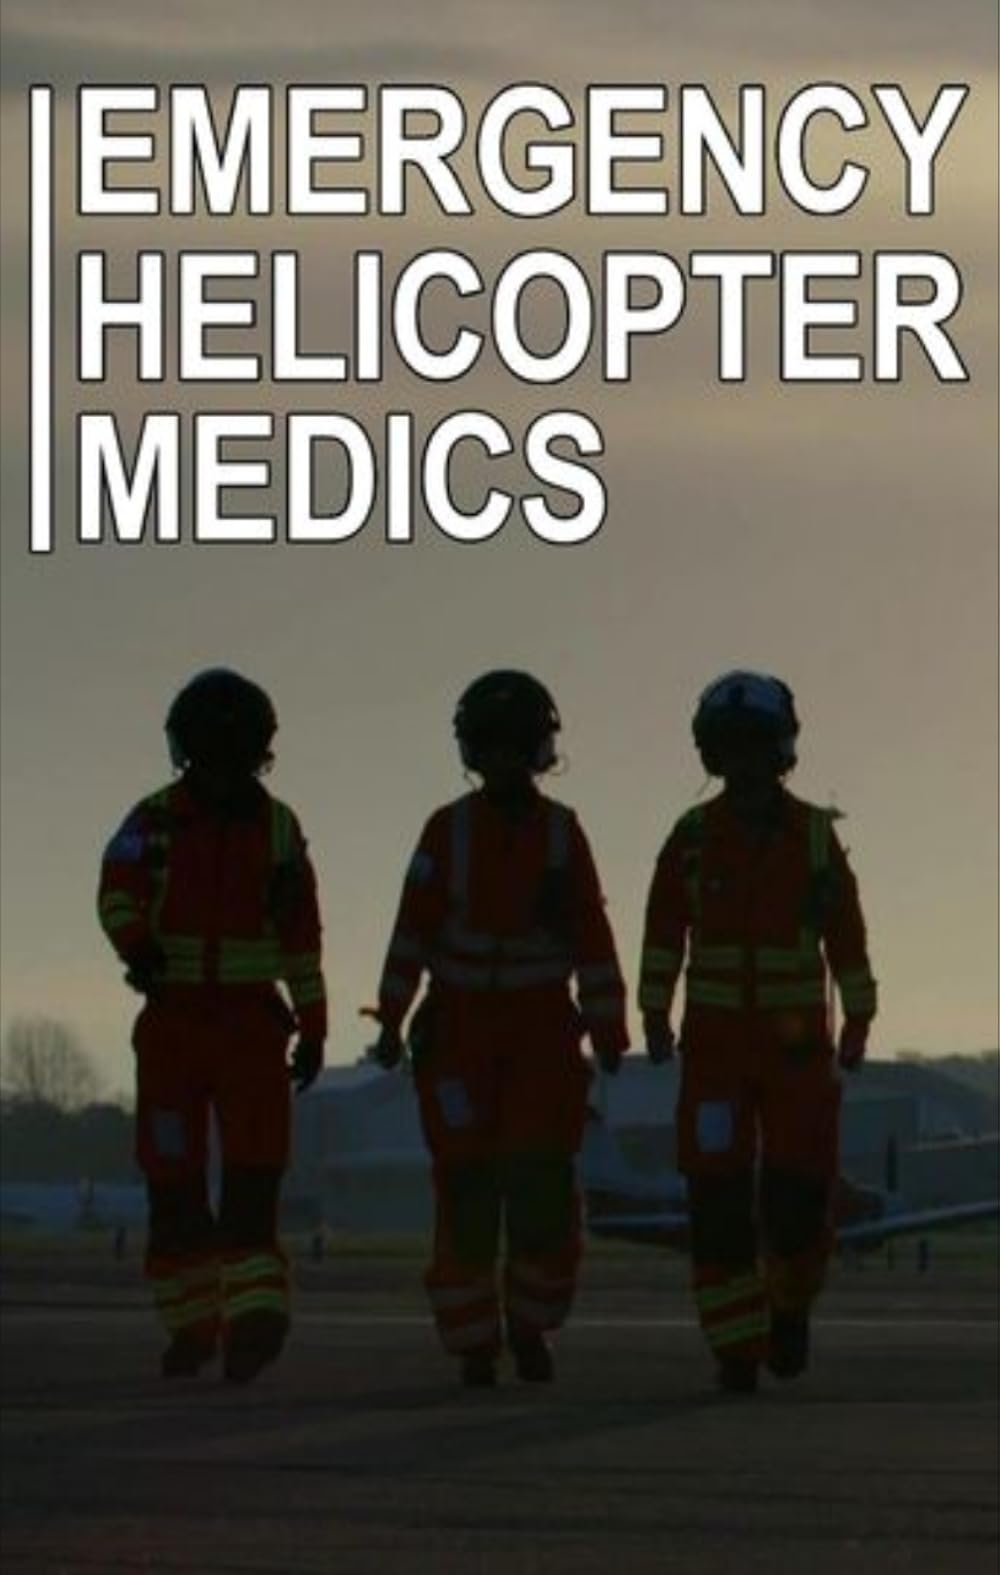 Emergency helicopter medics